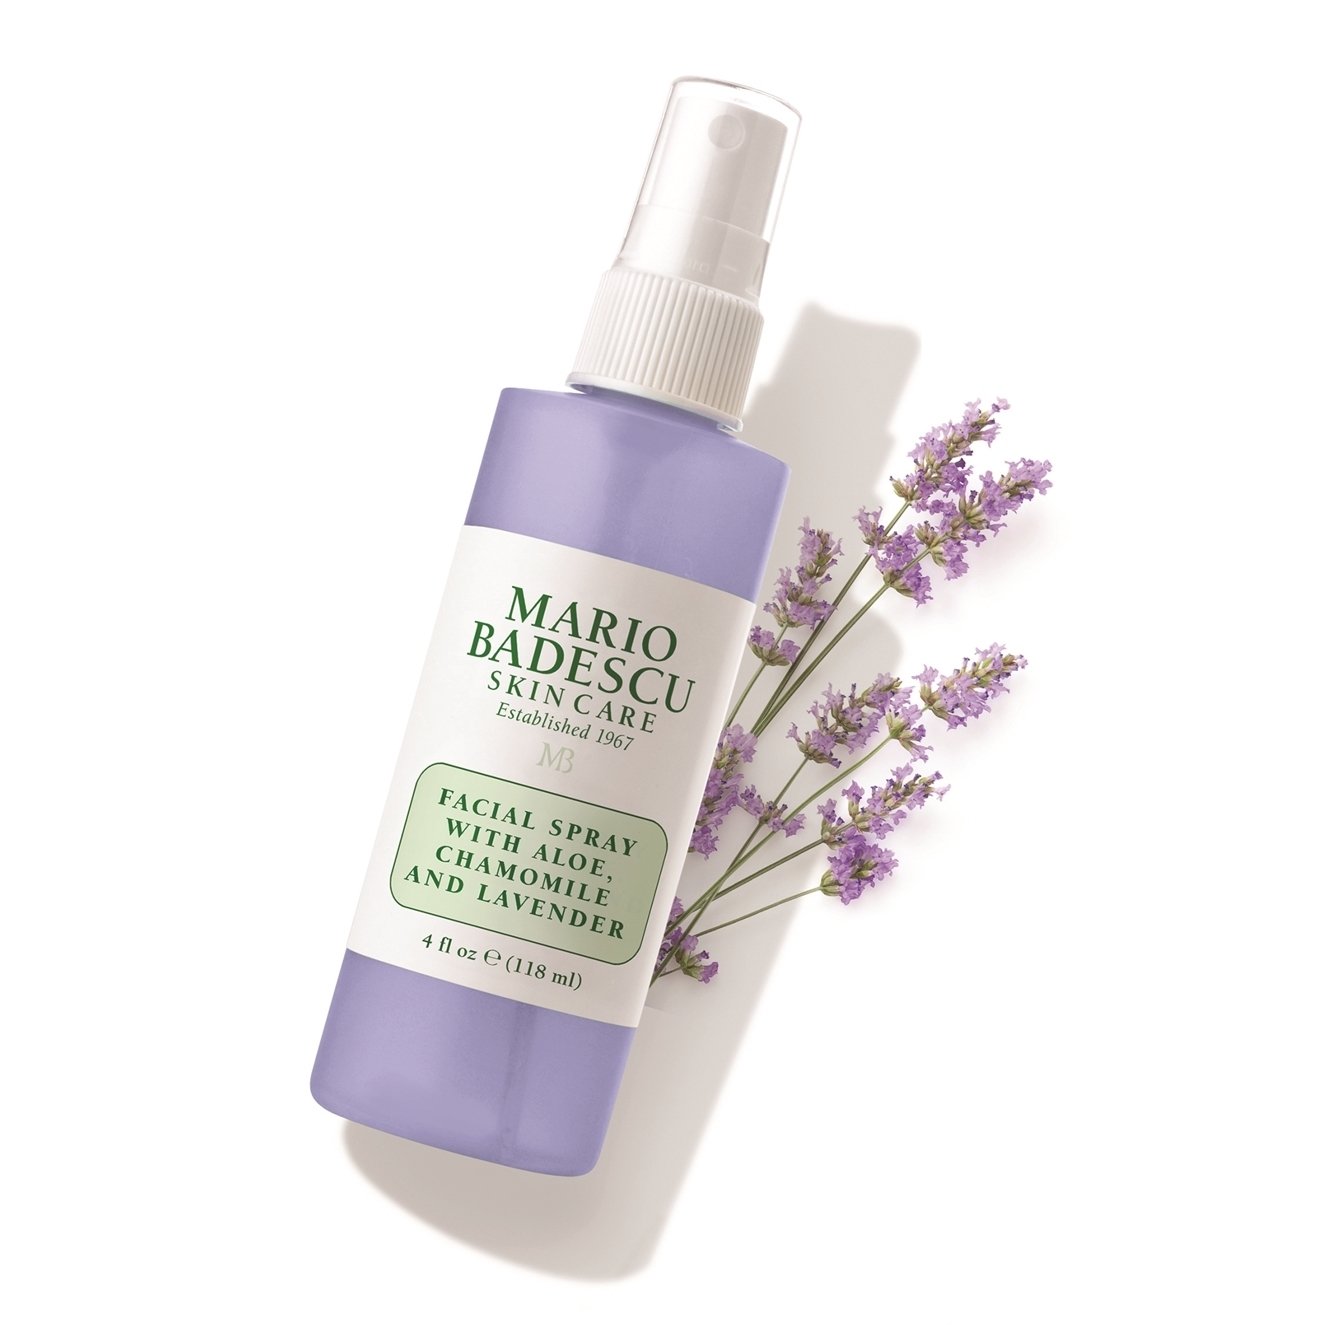 Mario Badescu Skin Care Facial Spray With Aloe Chamomile And Lavender 59 Ml